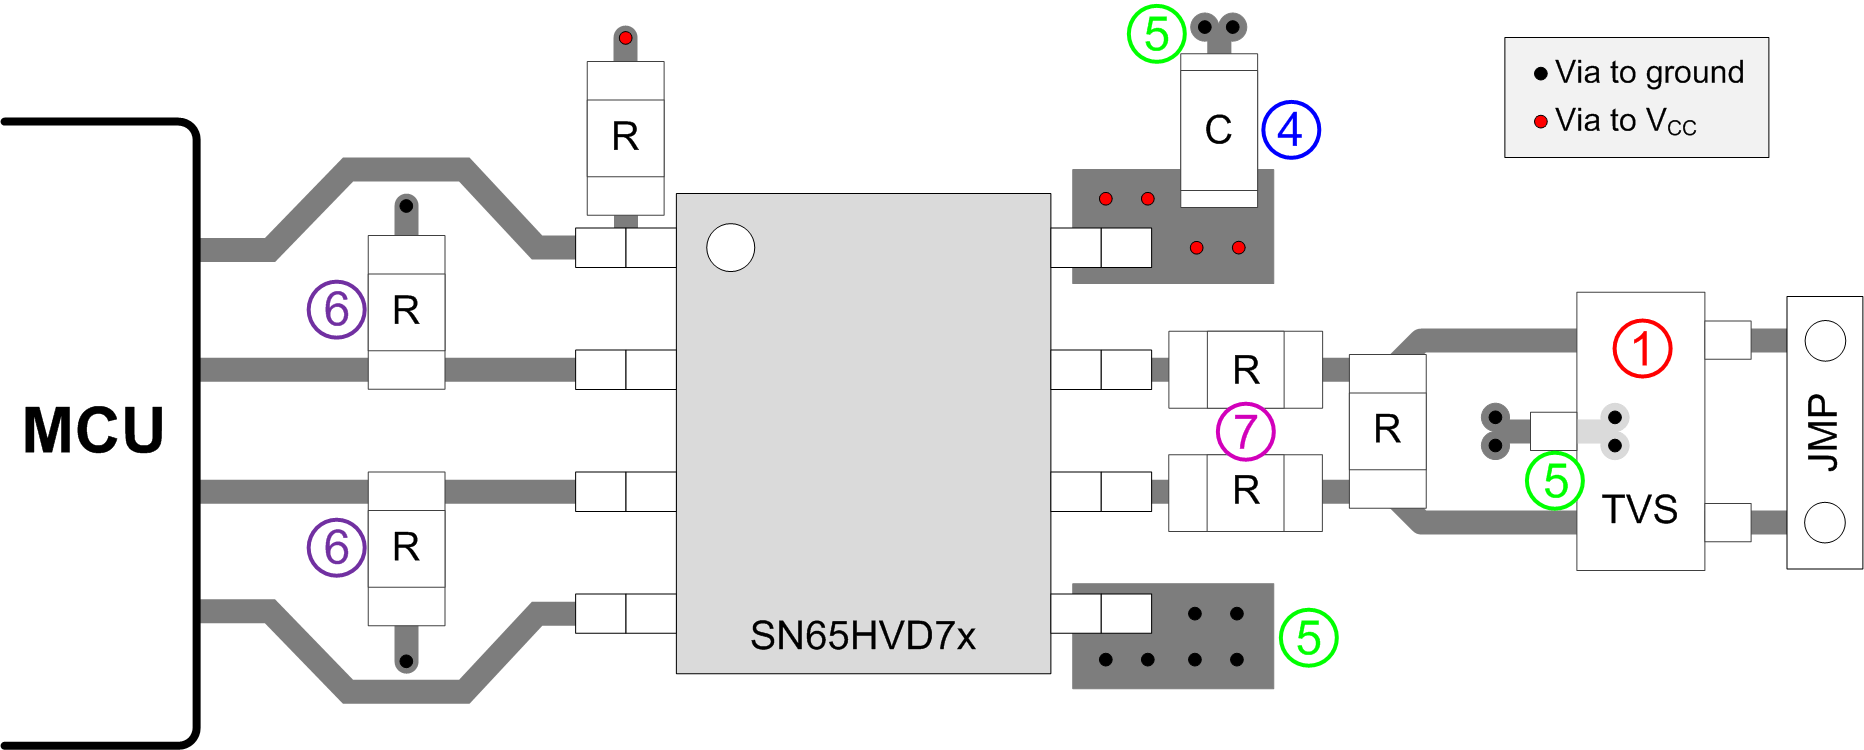 SN55HVD75-EP layoutexample1.gif